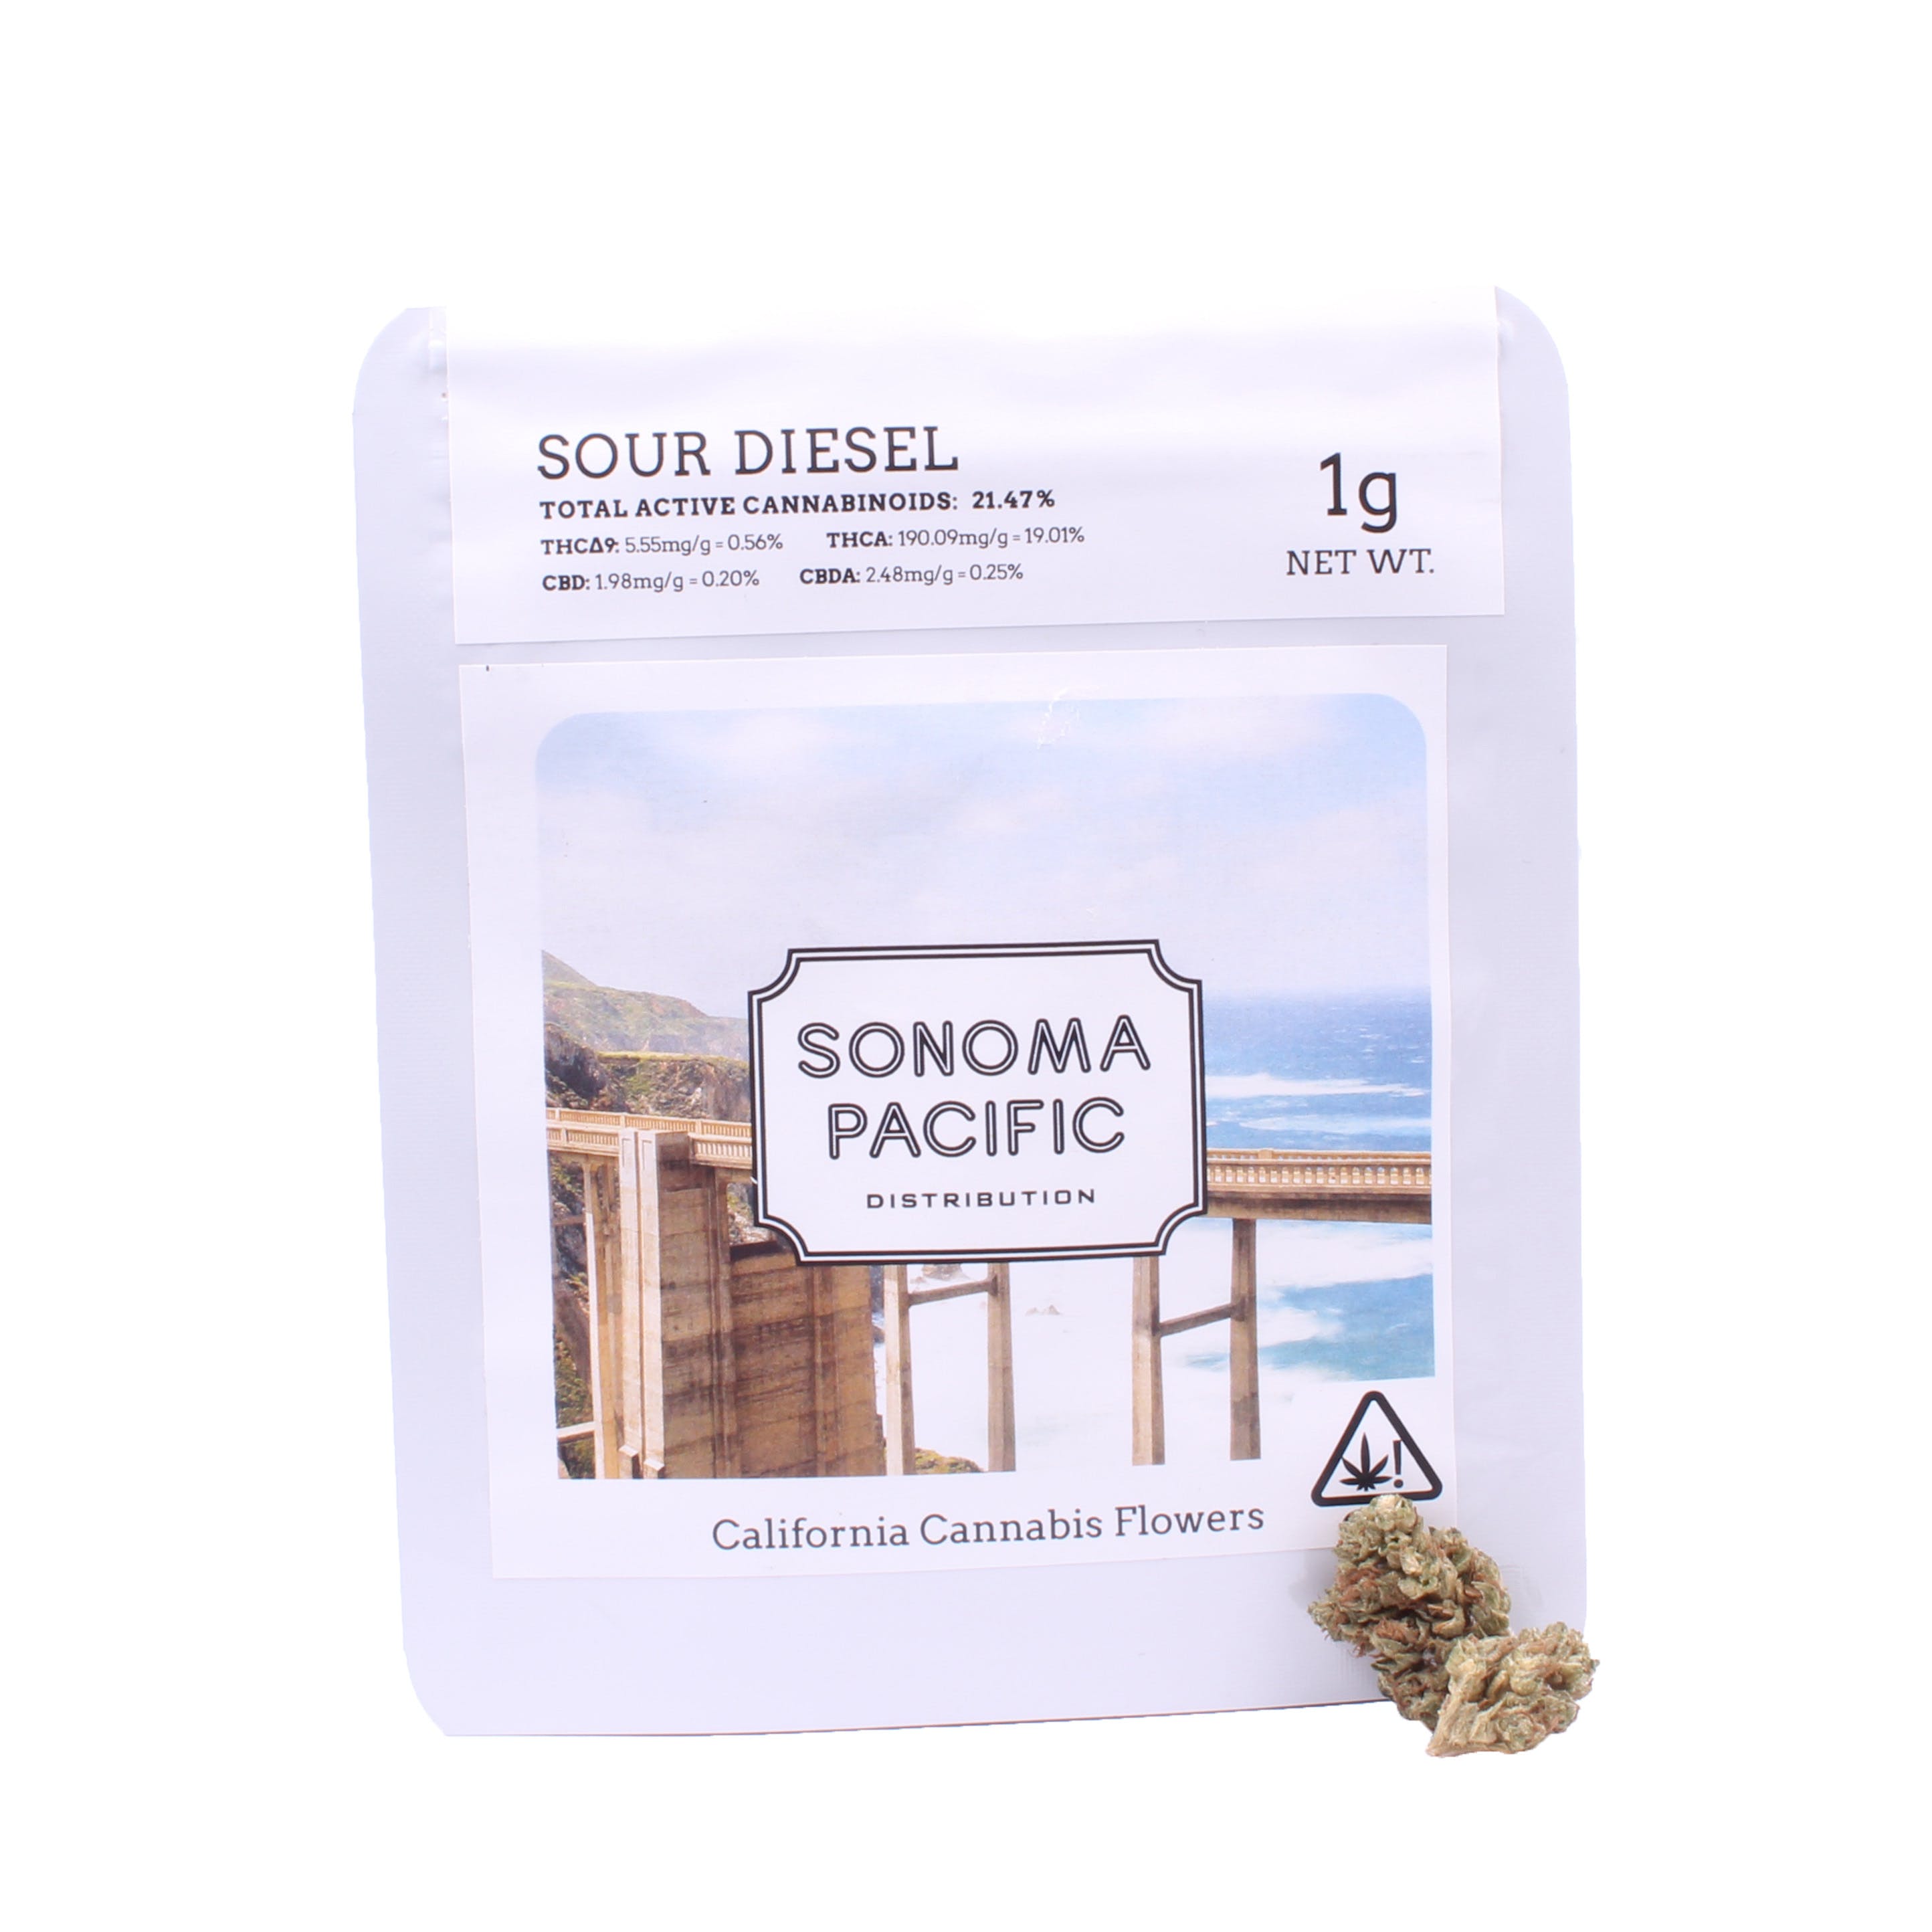 Sonoma Pacific: Sour Diesel - 19% THC / 0.02% CBD